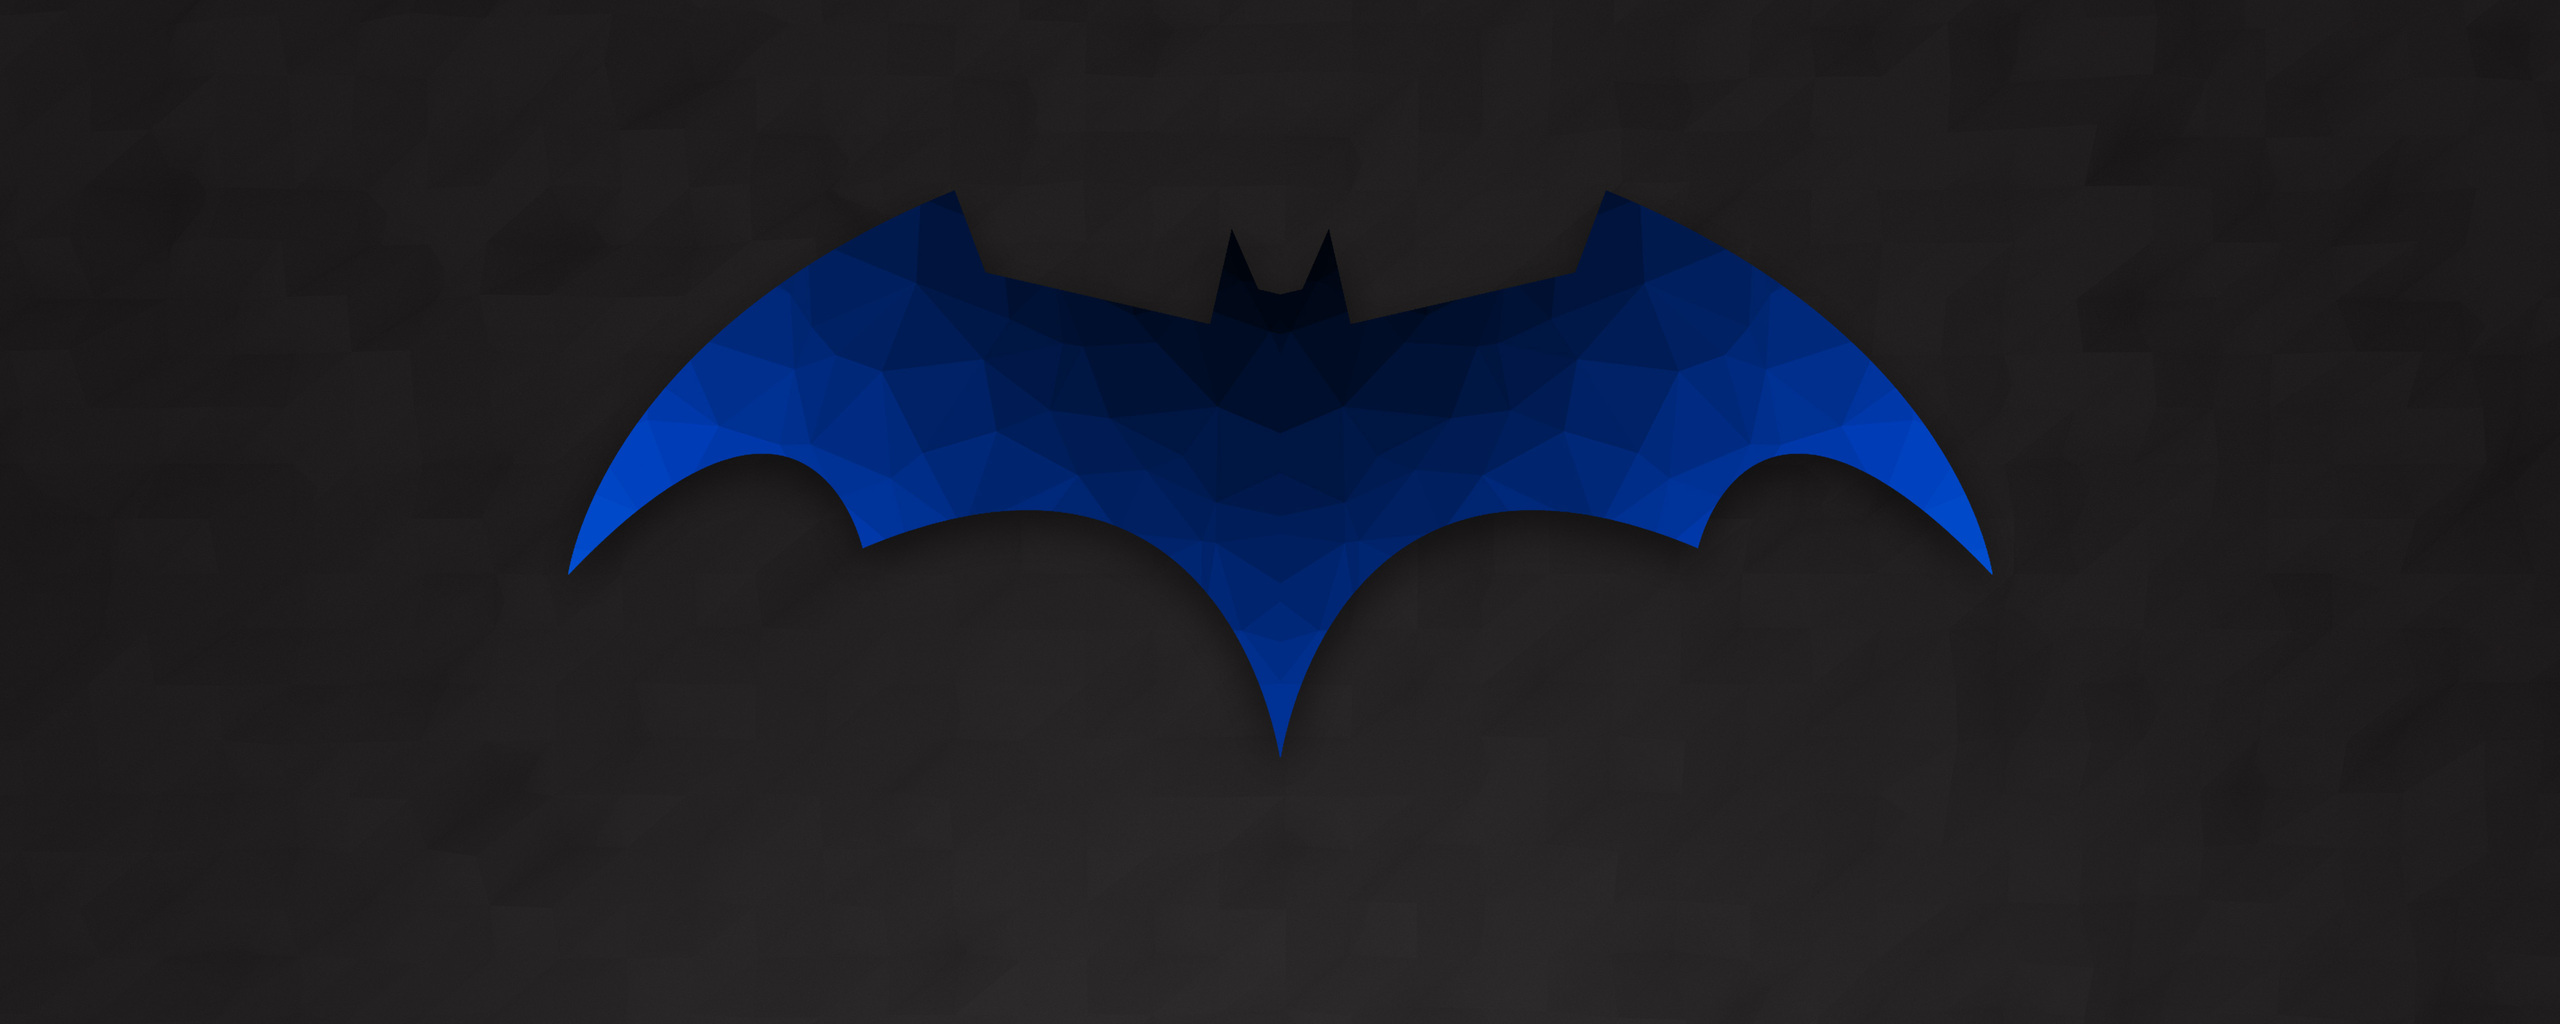 Batman Dual Monitor Wallpapers